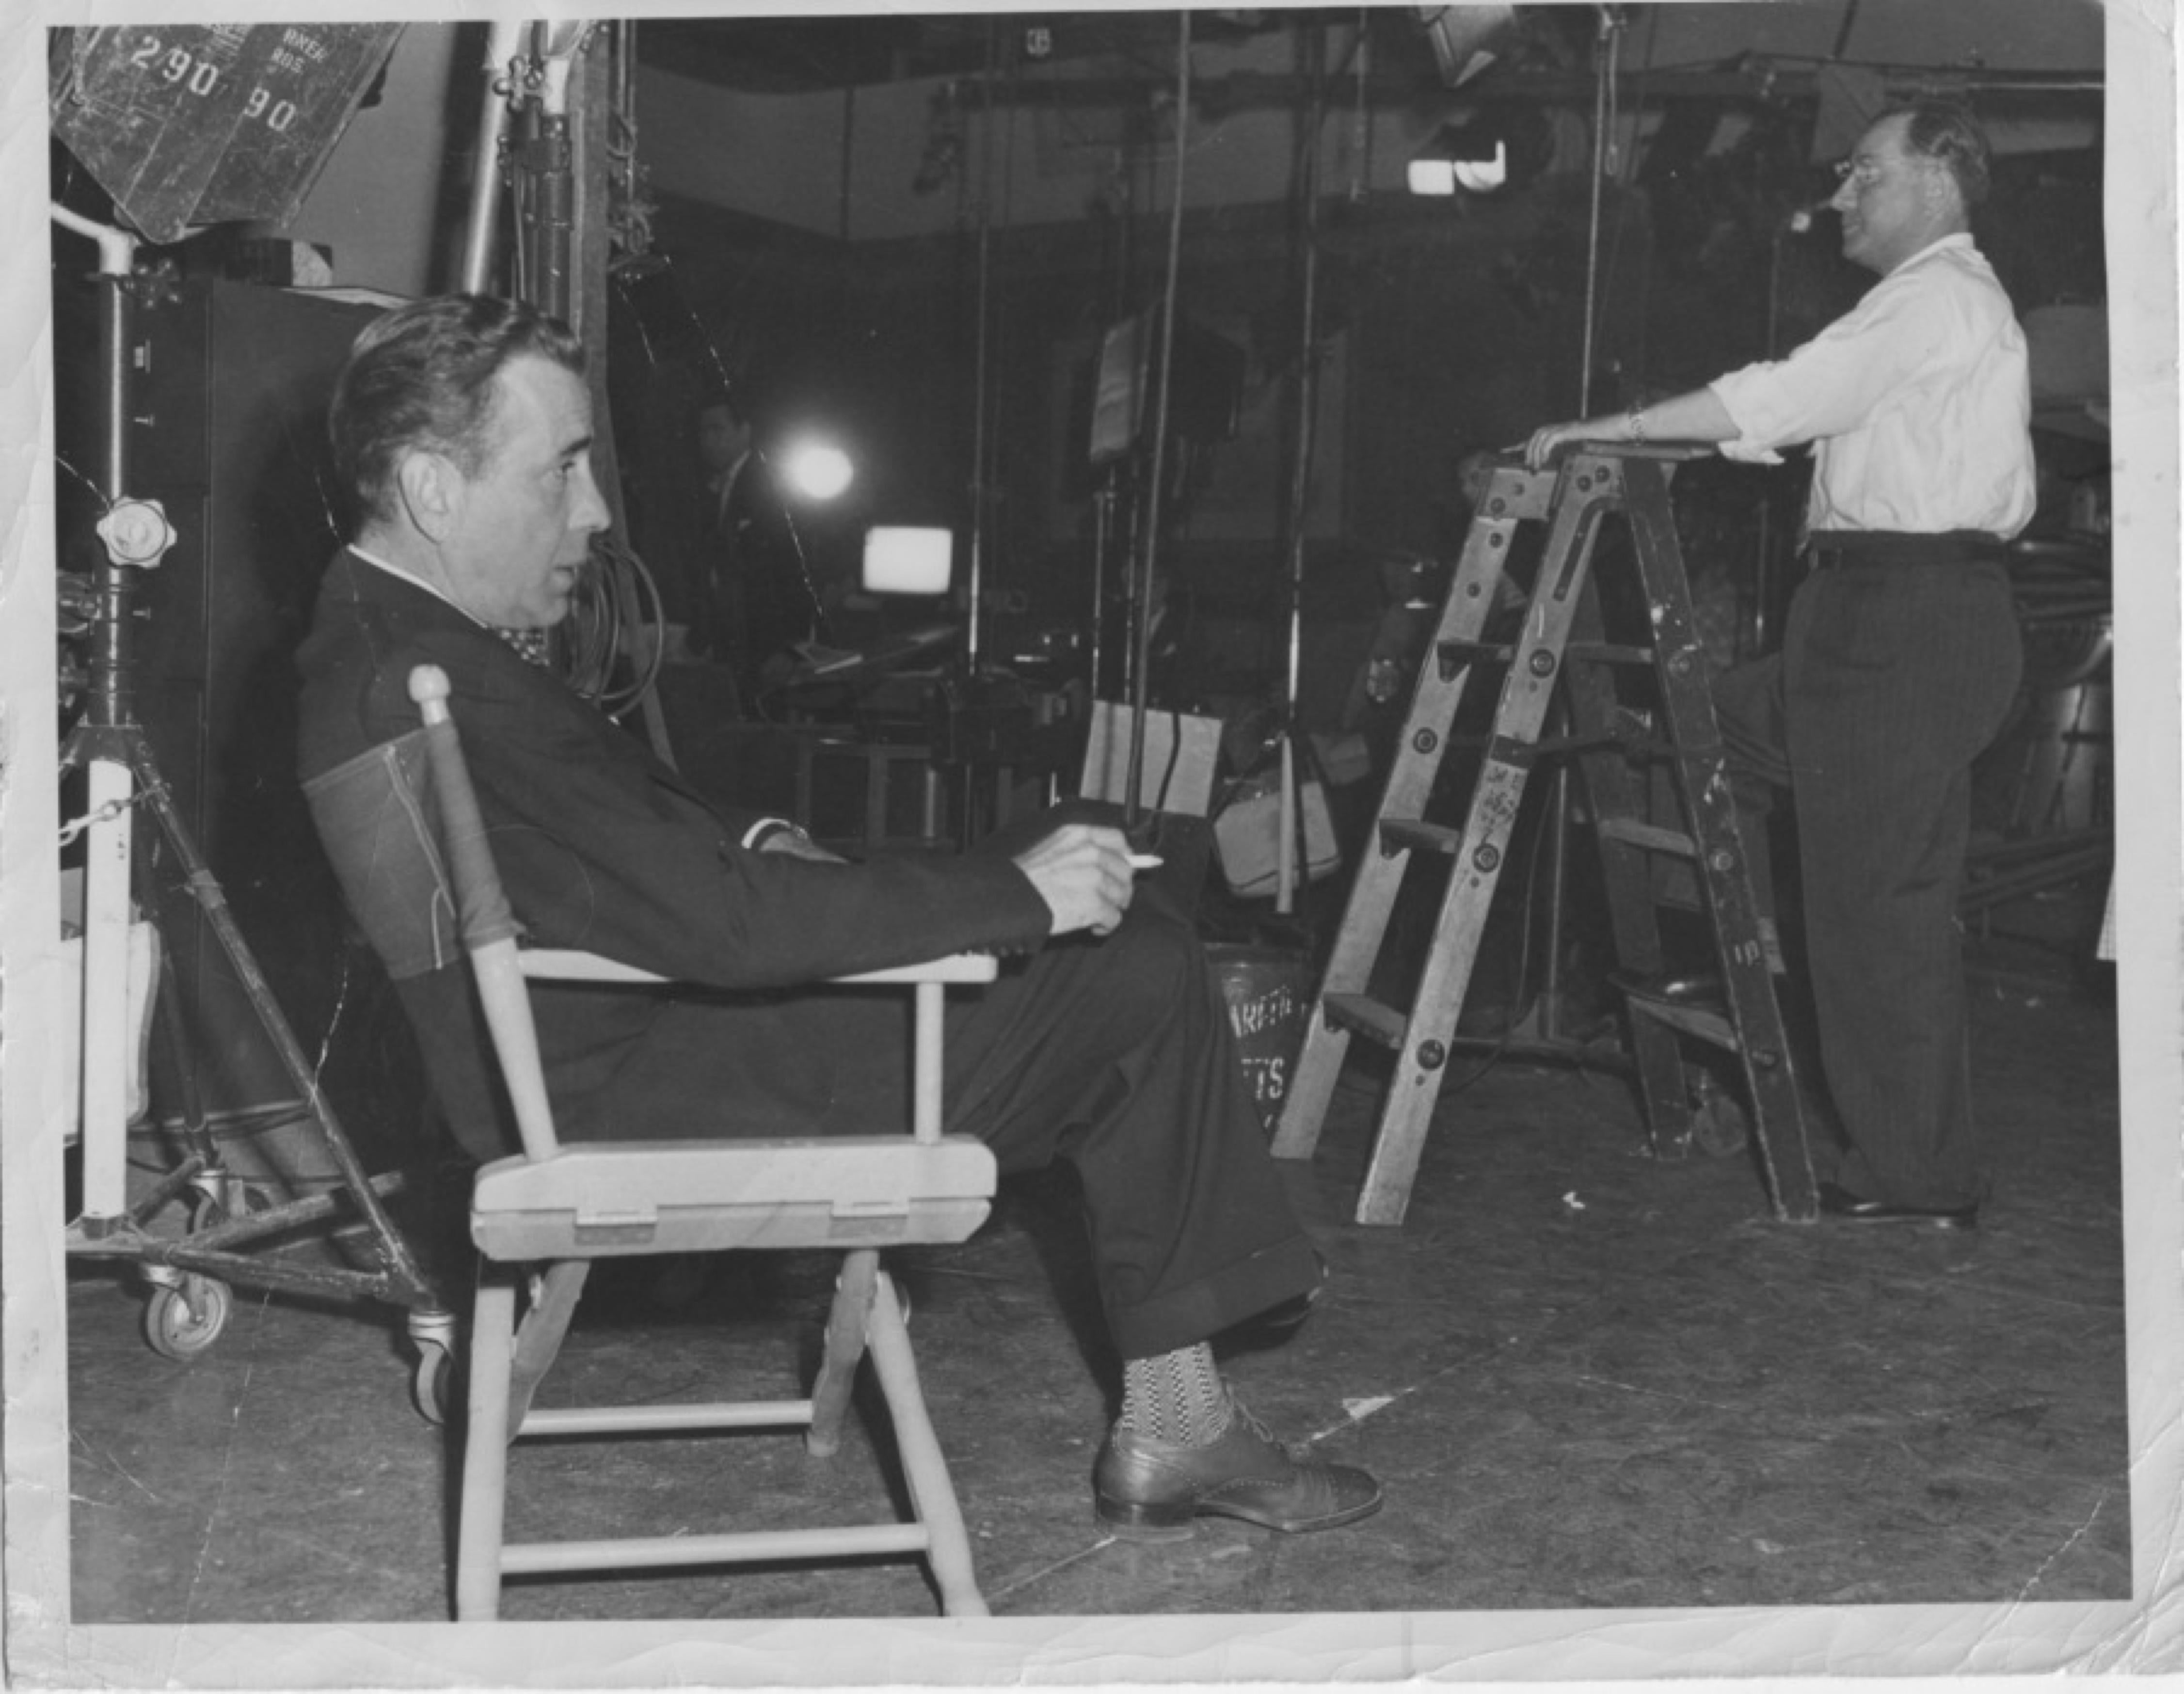 Unknown Portrait Photograph - The American Actor Humphrey Bogart - Vintage Photo - 1940s